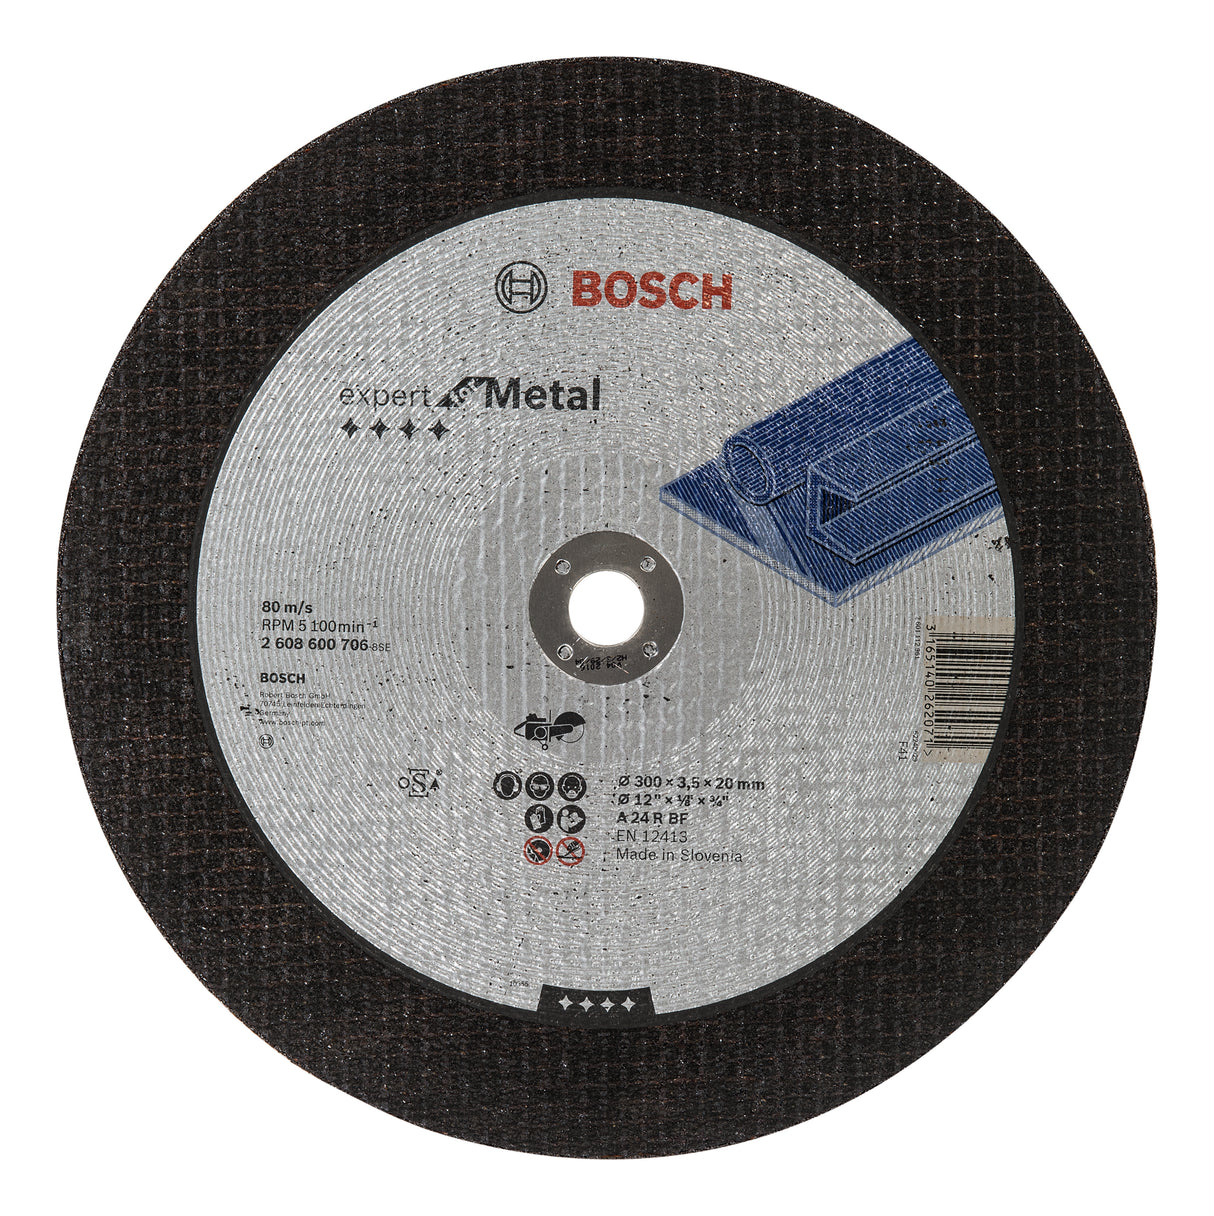 Bosch Professional Expert Metal Straight Cutting Disc A 24 R BF - 300mm x 20.00mm x 3.5mm